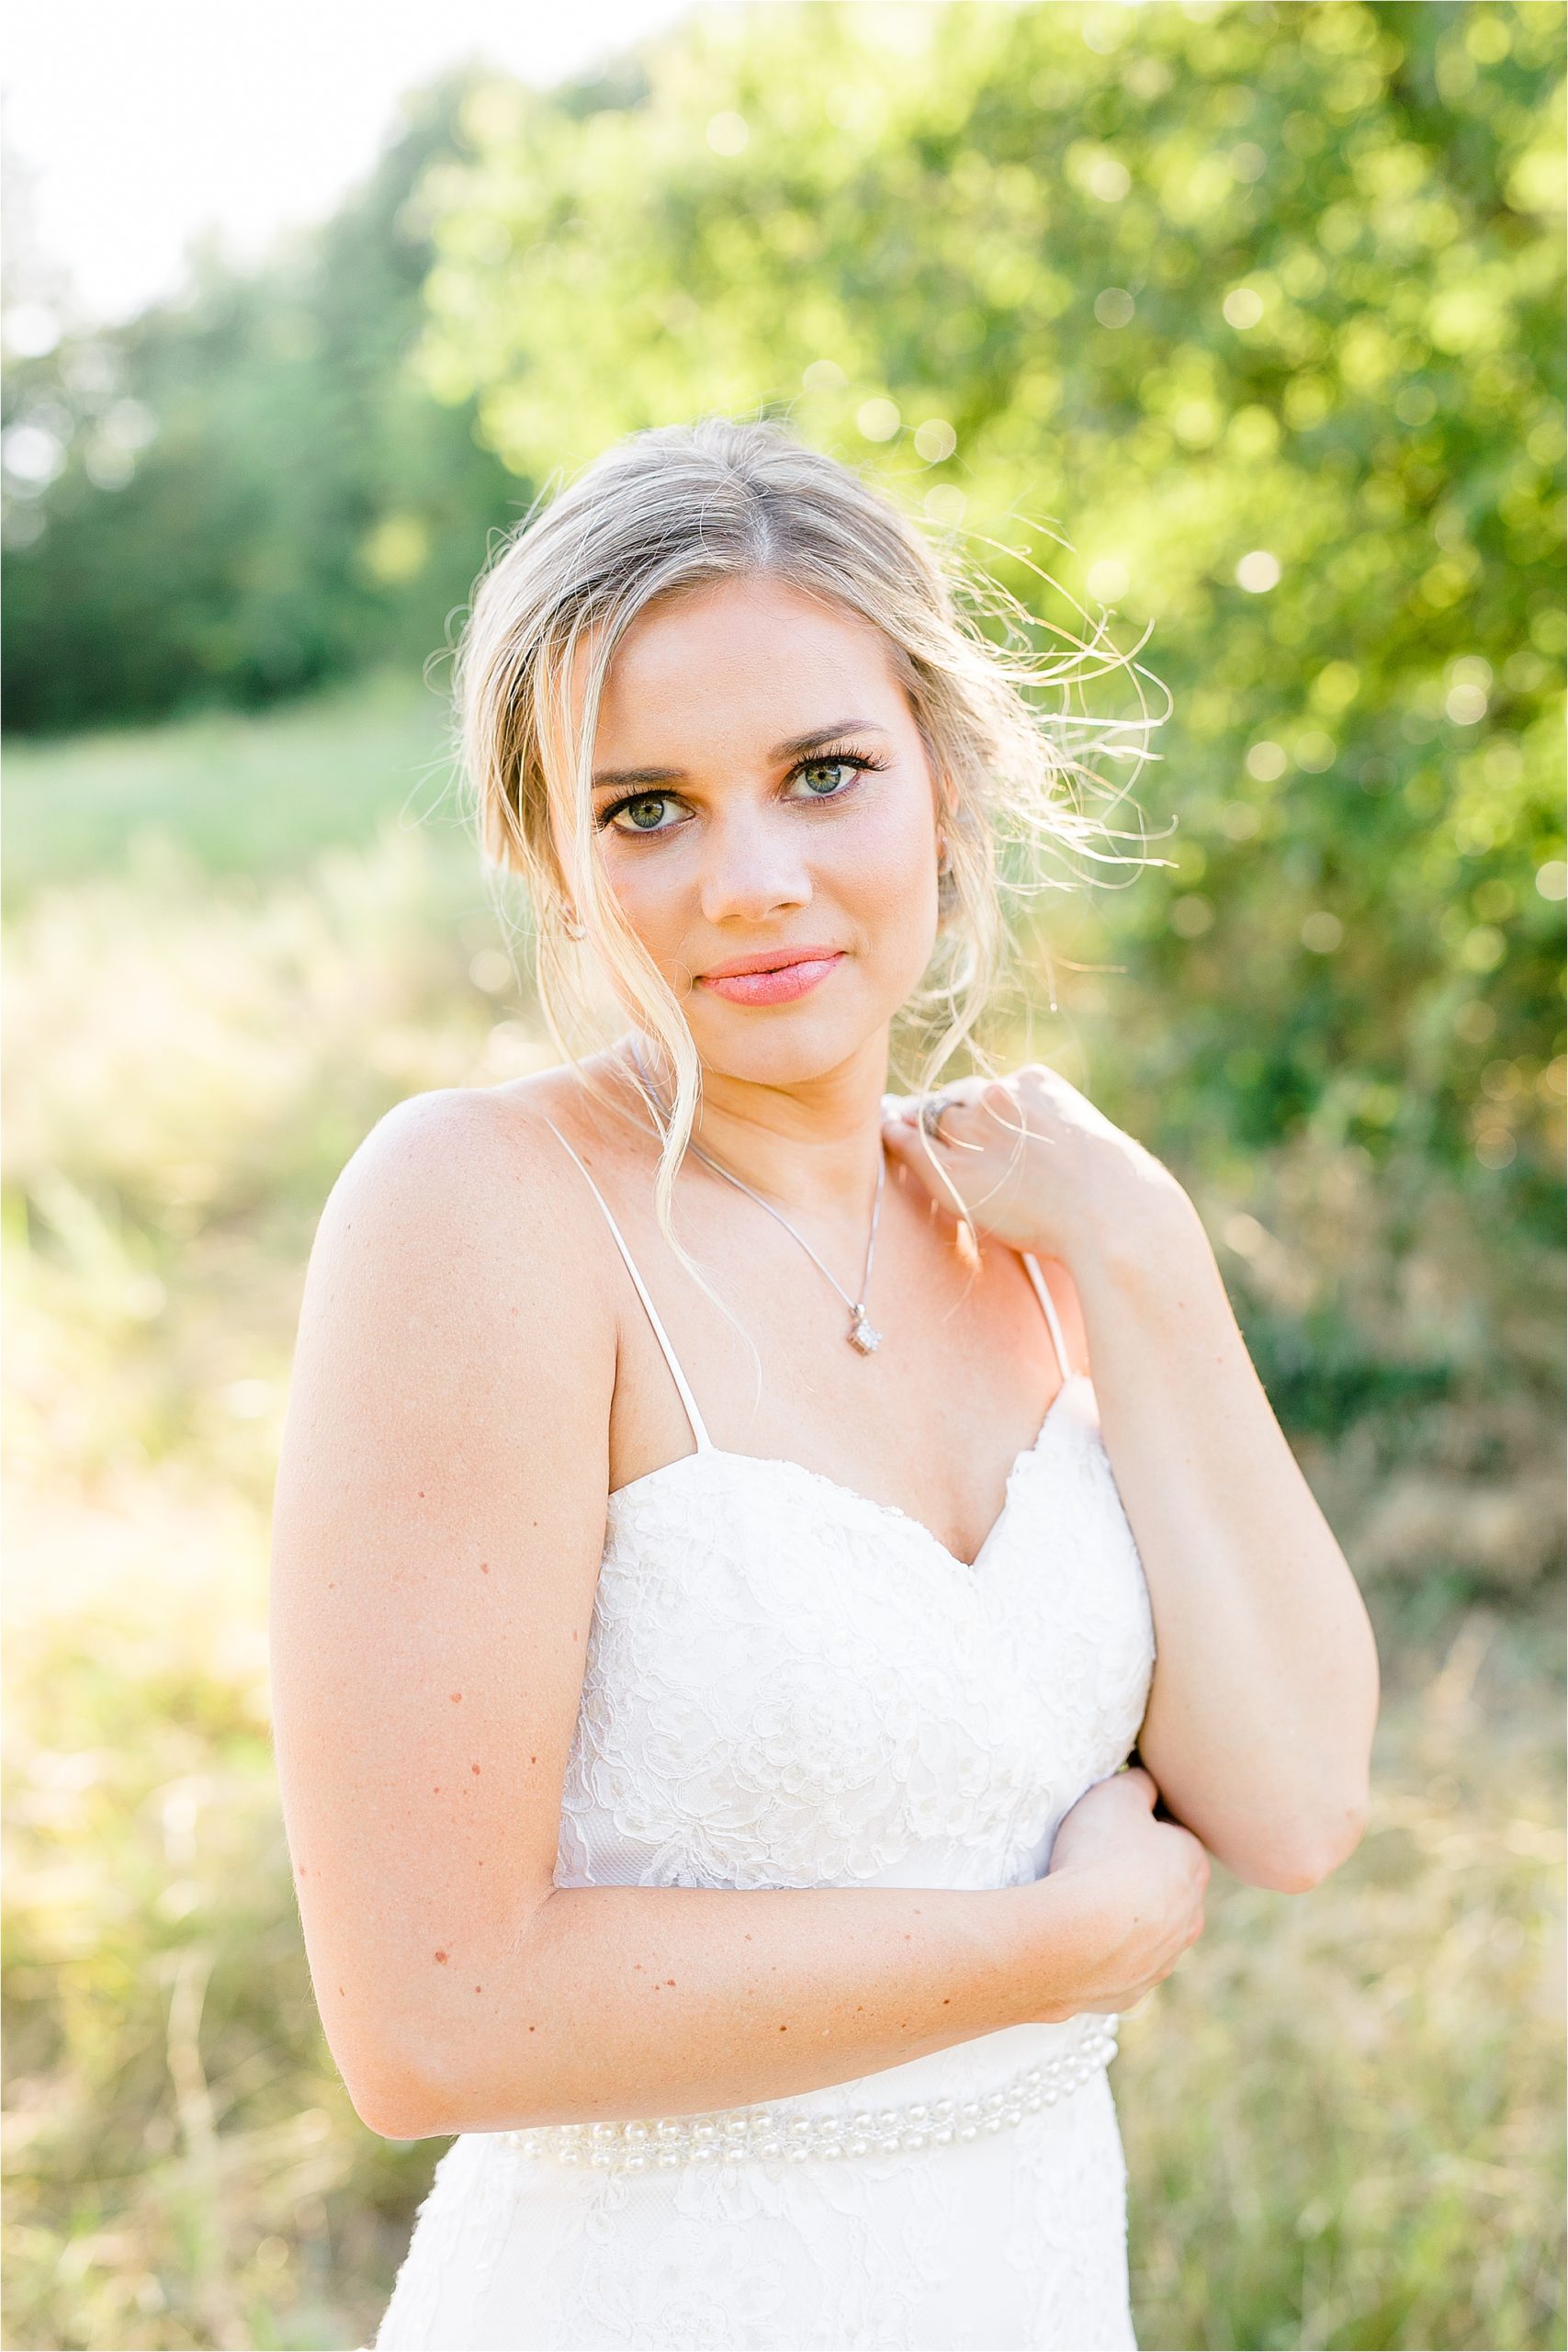 A Bridal Portrait at Arbor Hills in Plano, Texas by DFW Wedding Photographer Jillian Hogan 